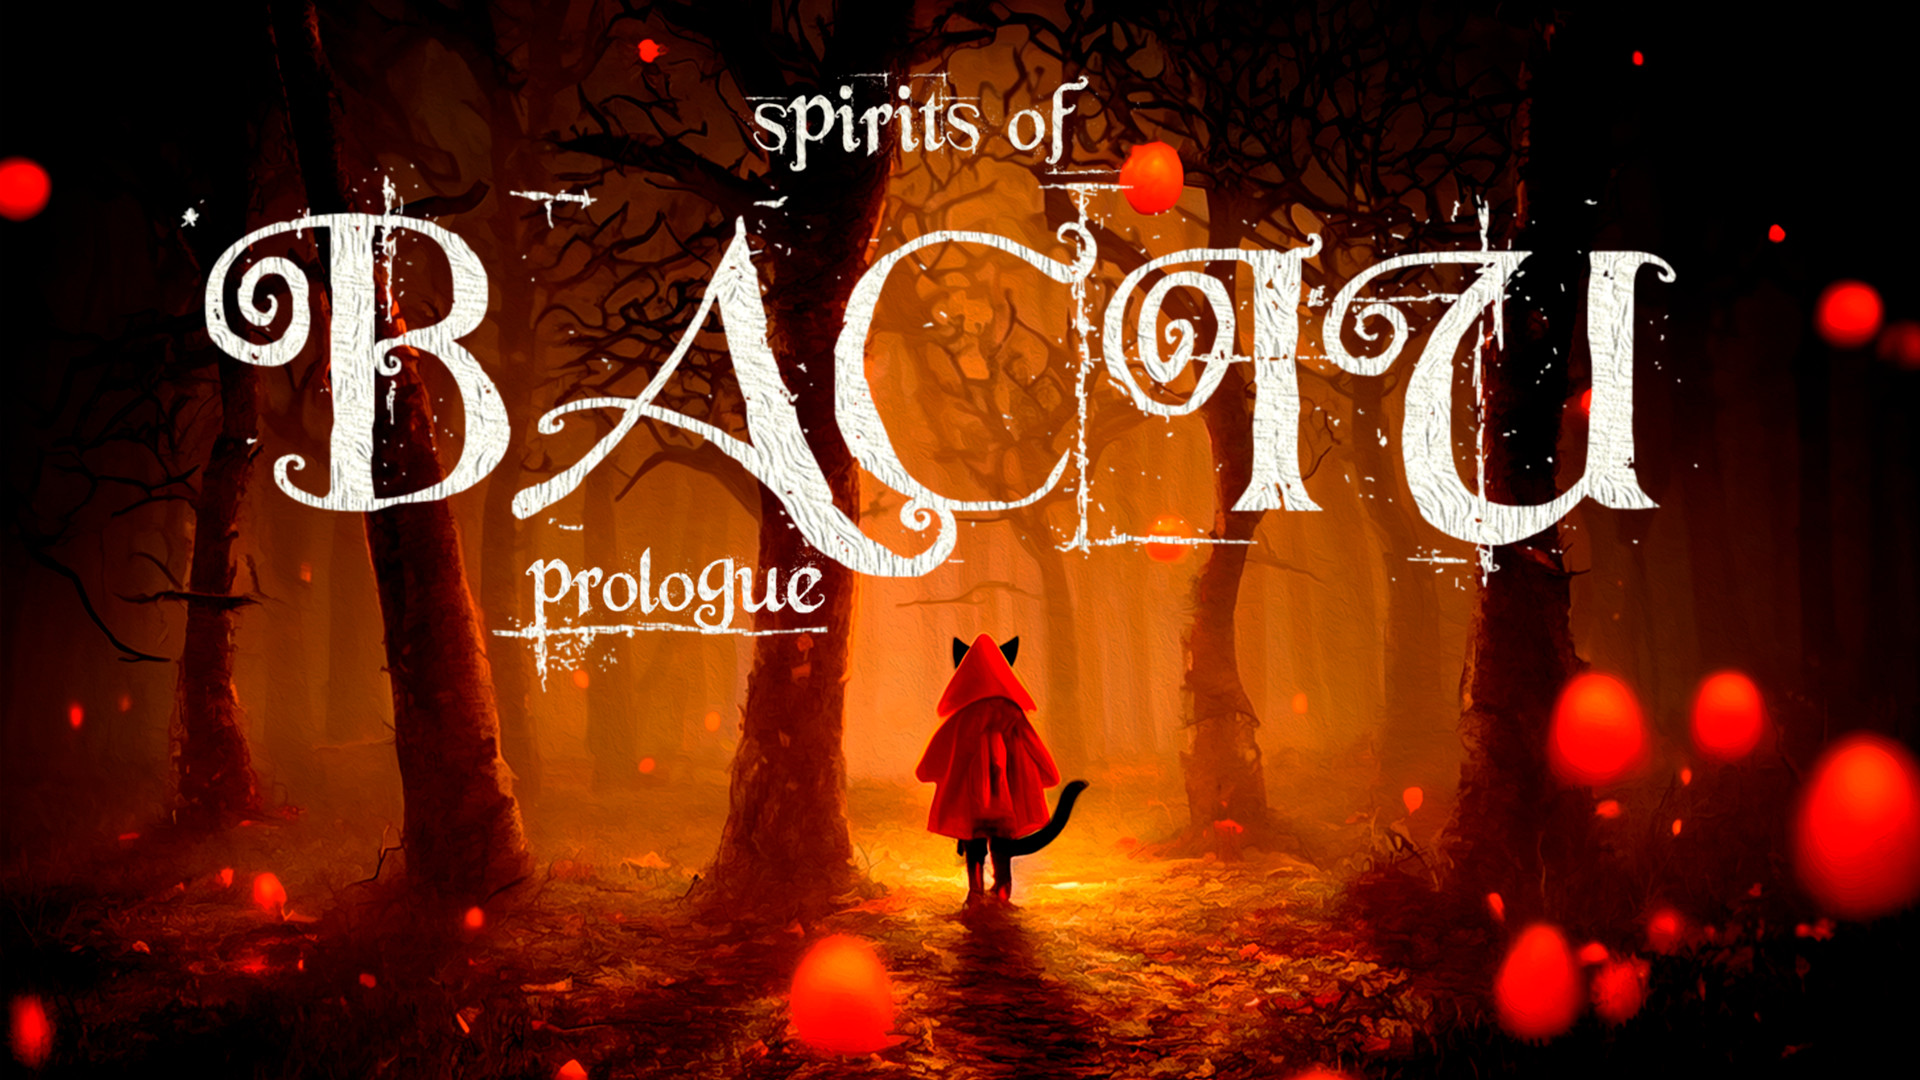 Spirits of Baciu